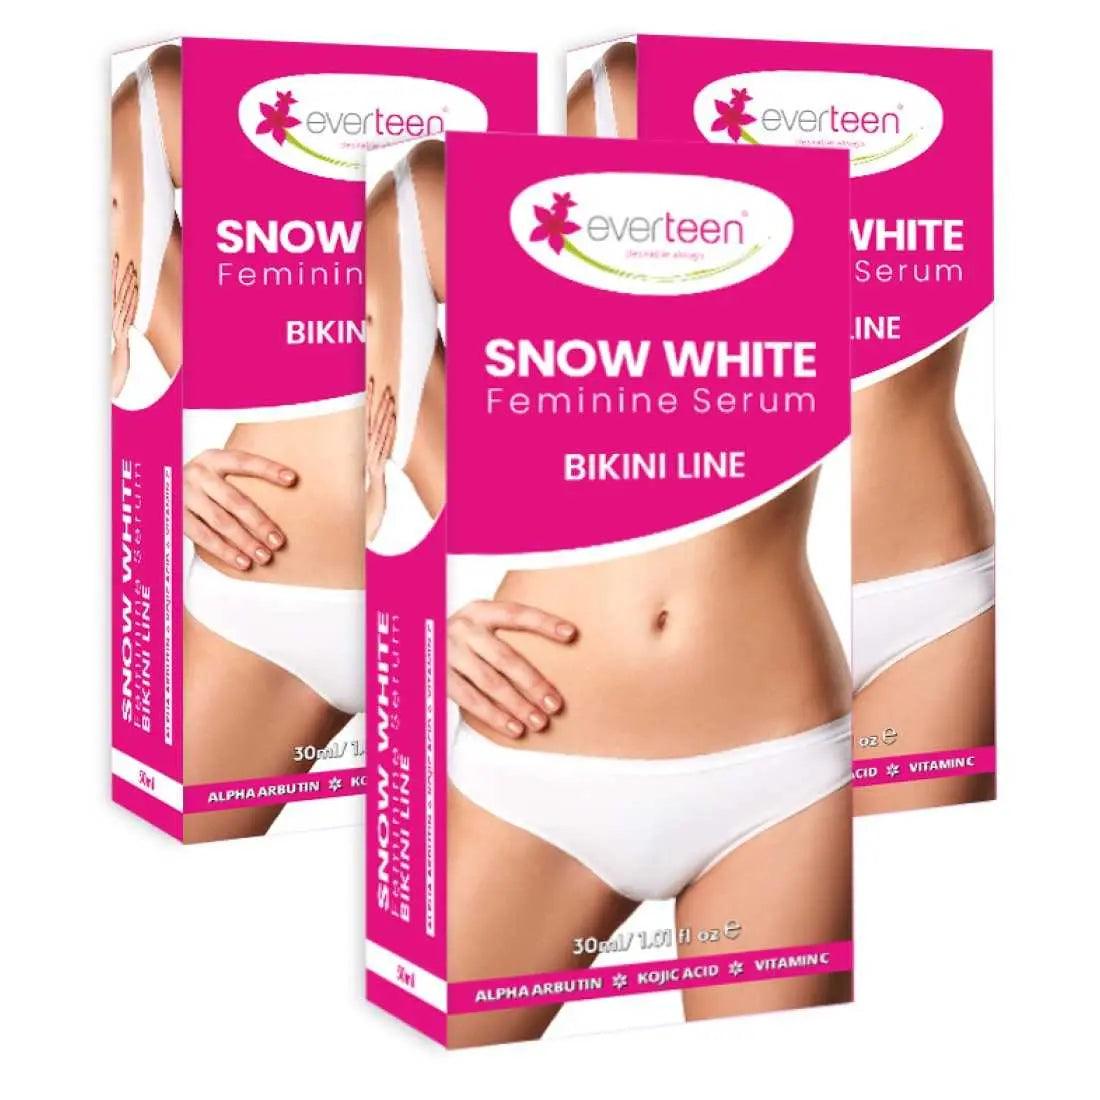 everteen Snow White Feminine Serum for Bikini Line in Women - 30ml 9559682315182